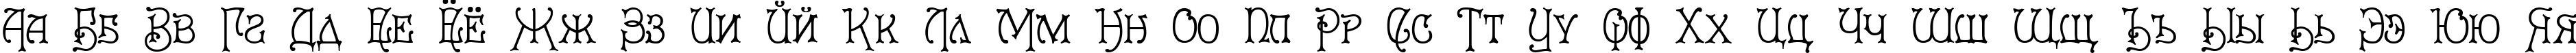 Пример написания русского алфавита шрифтом Le Grand